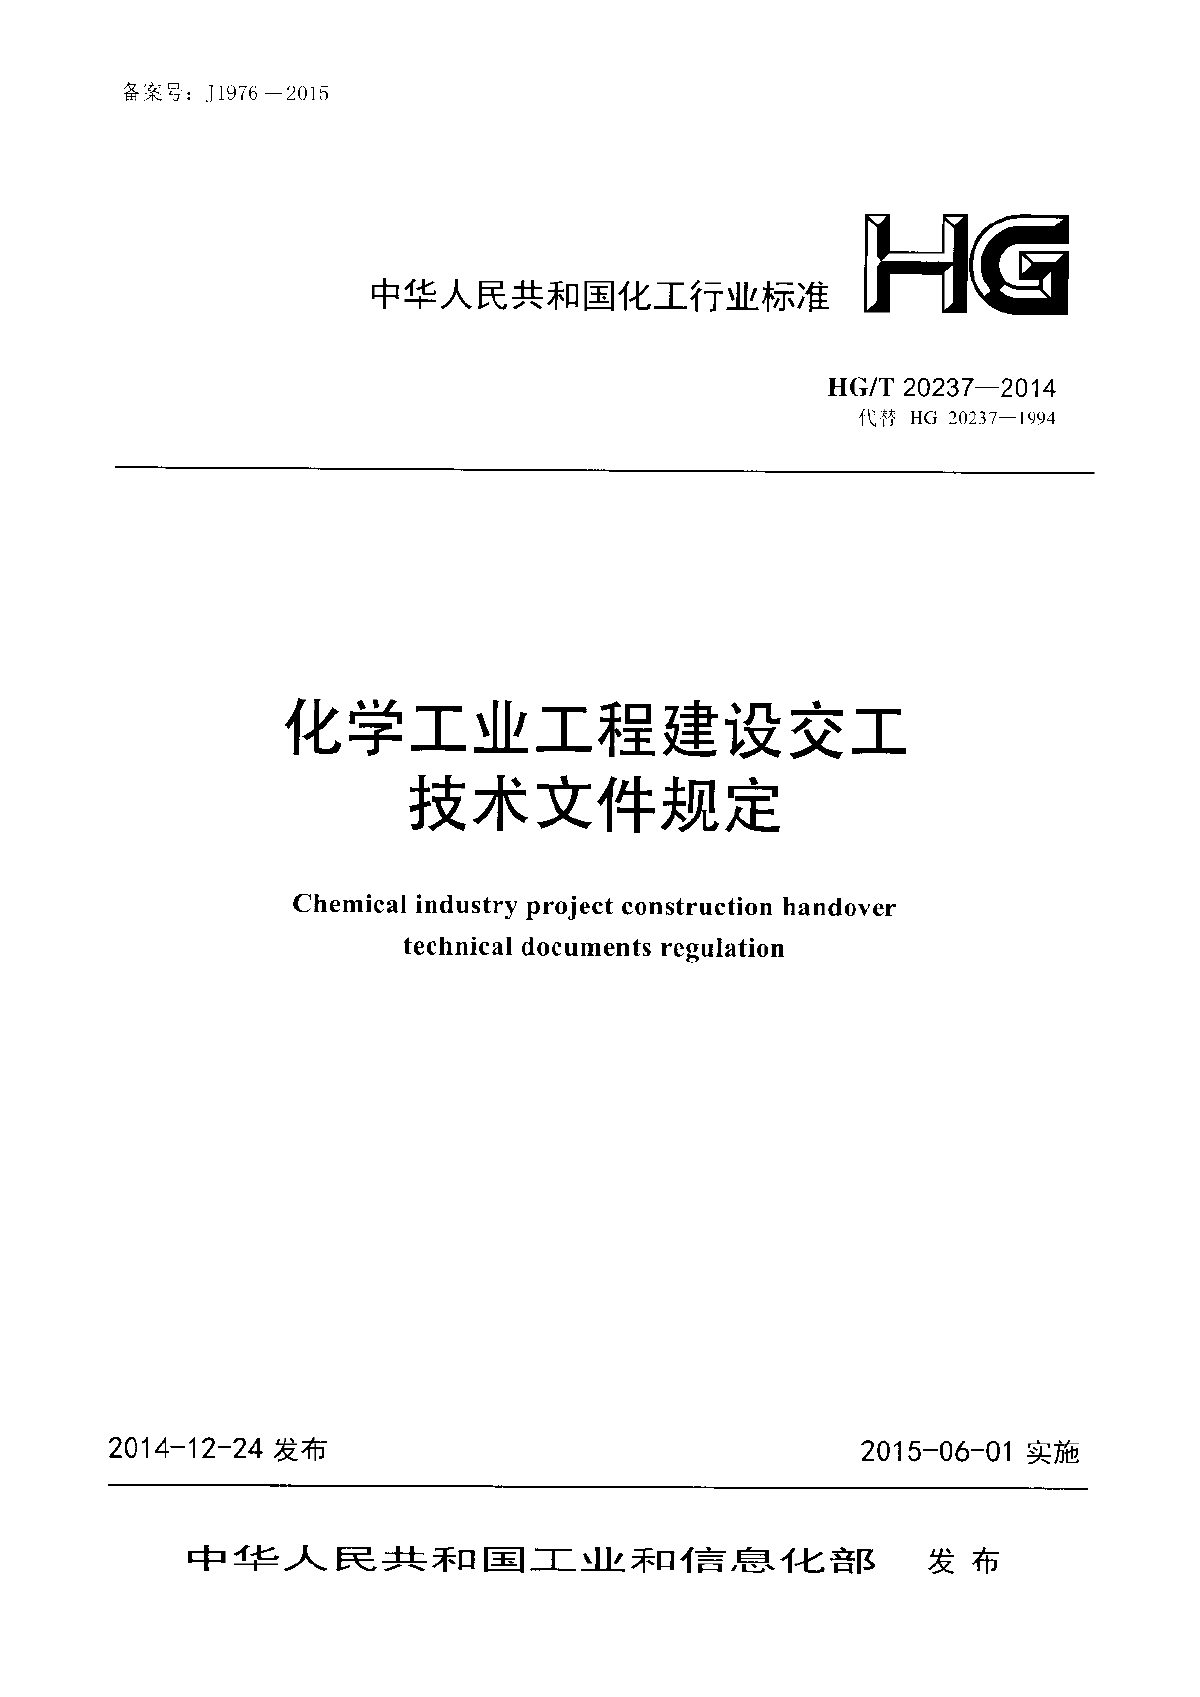 HG/T 20237-2014 化学工业工程建设交工技术文件规定